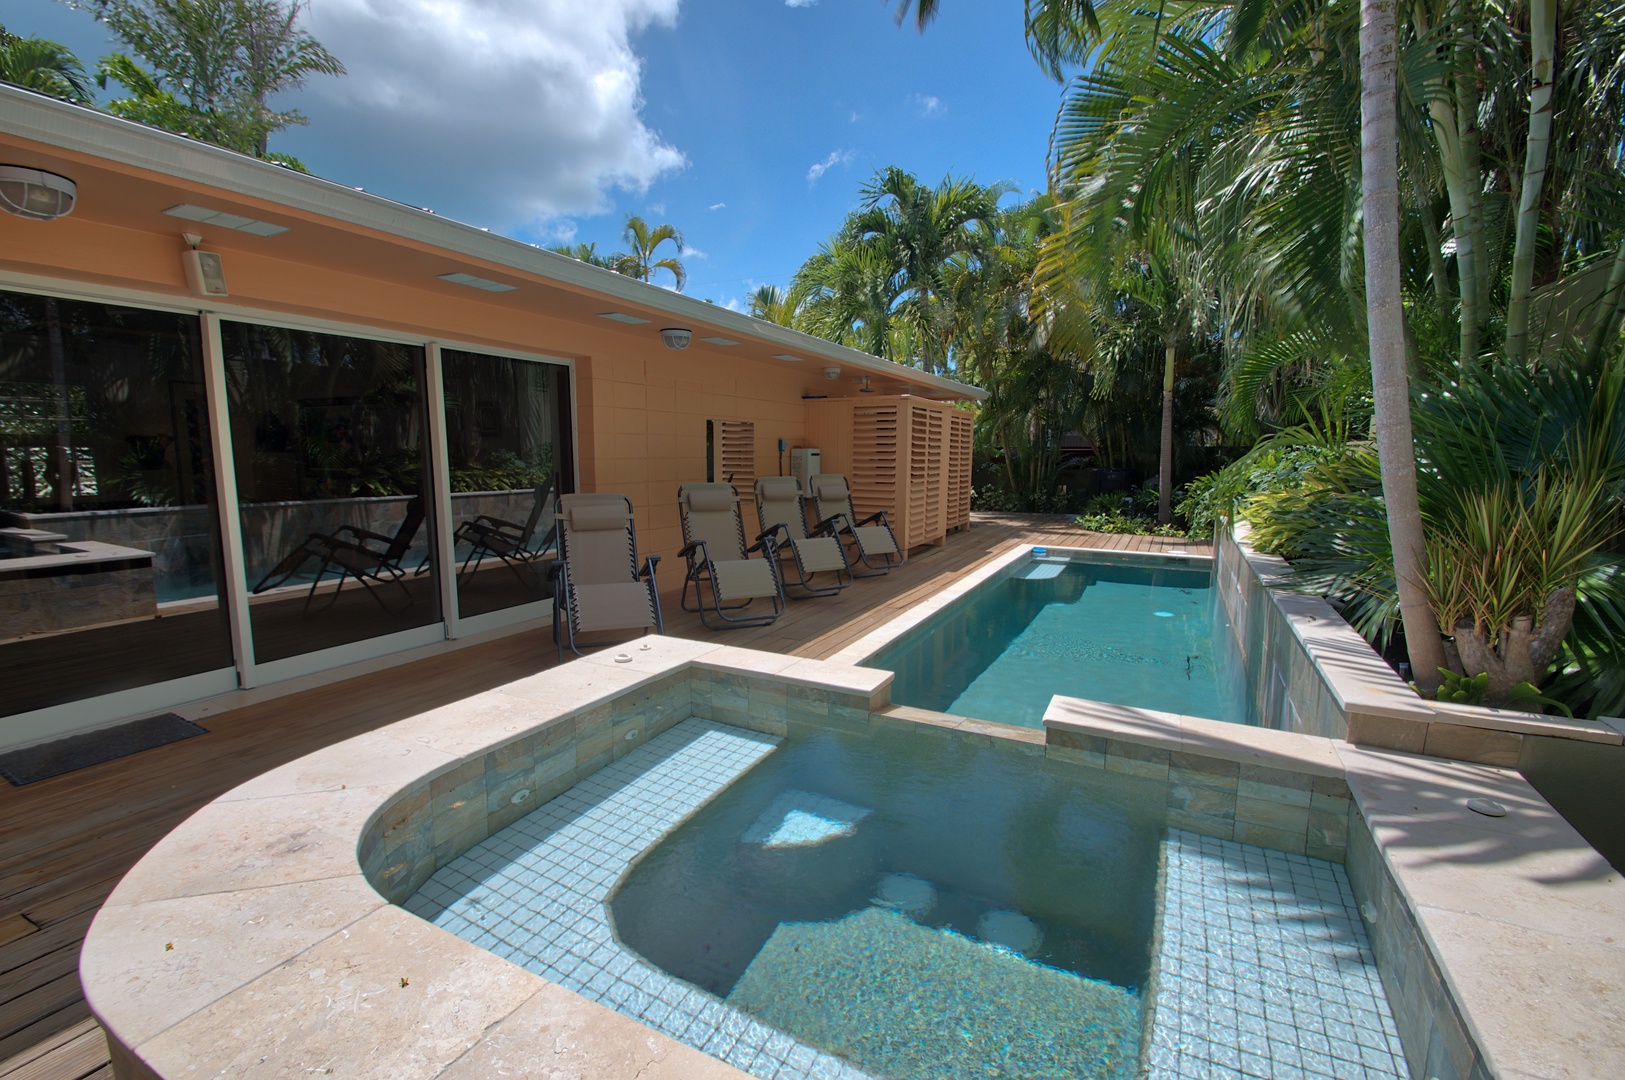 Jacuzzi and Pool Villa de Palmas Key West